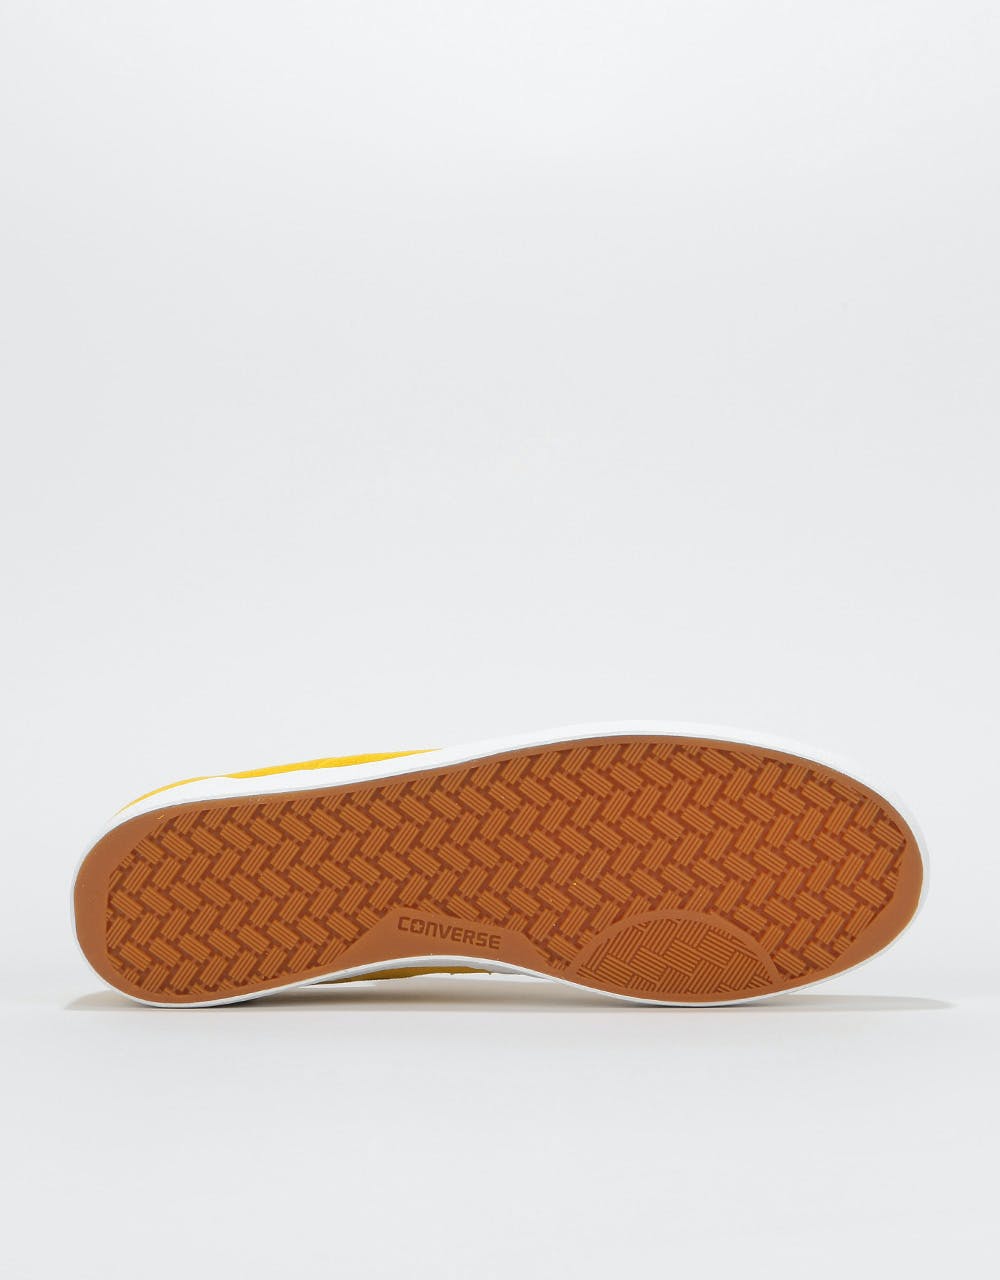 Converse Breakpoint Pro Ox Skate Shoes - Vivid Sulfur/White/Gum